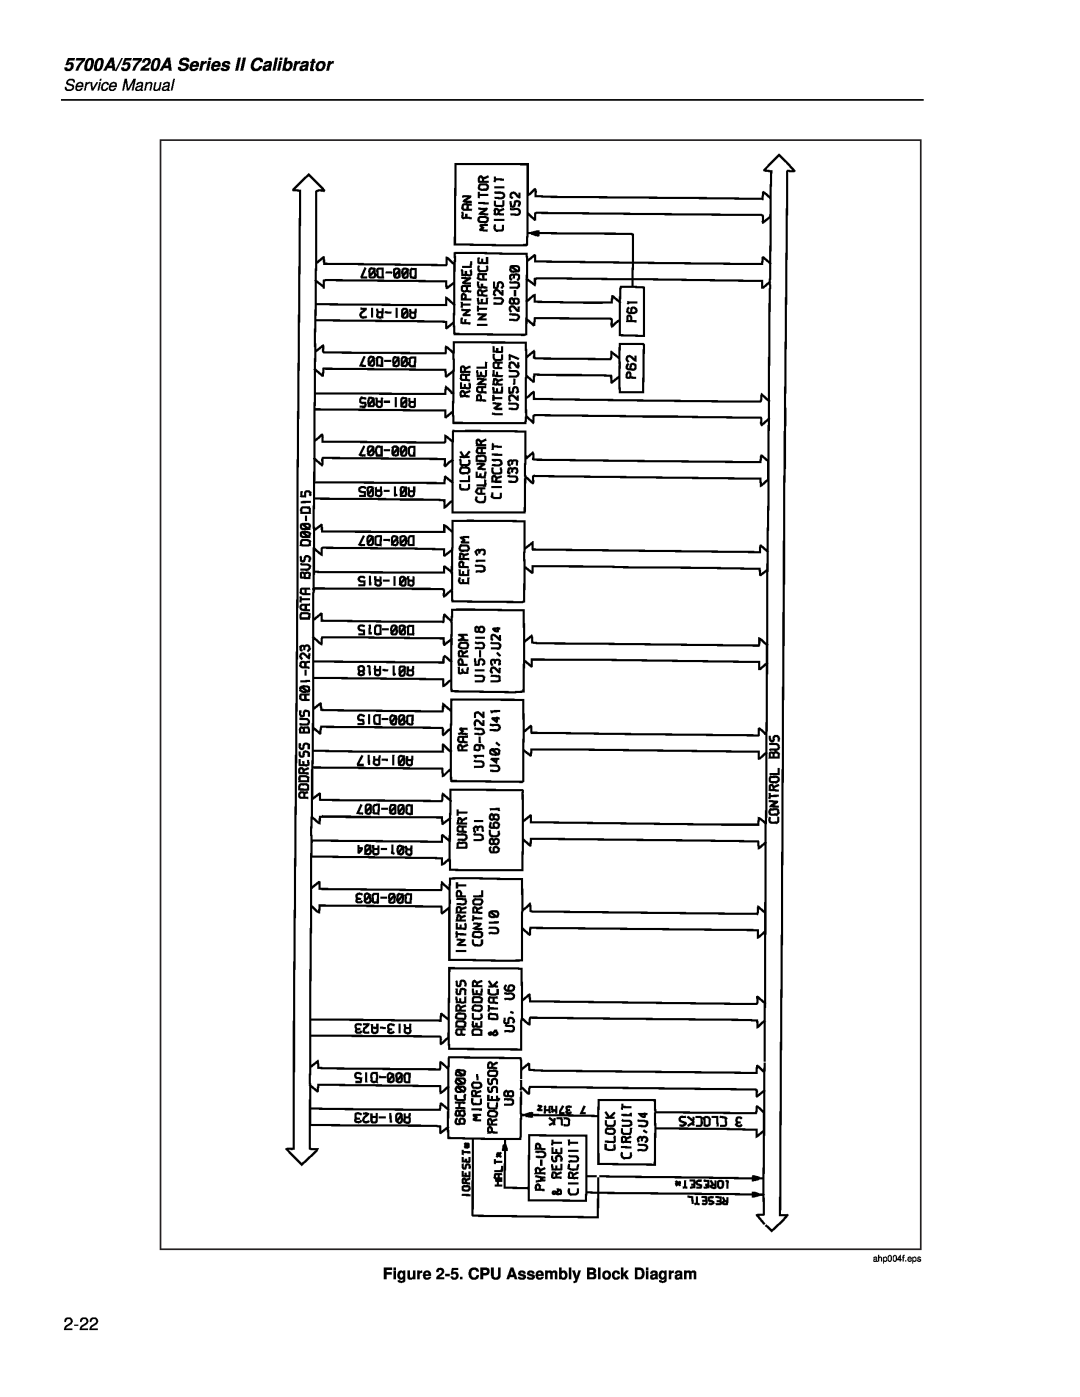 Fluke service manual 5700A/5720A Series II Calibrator, 5. CPU Assembly Block Diagram, ahp004f.eps 